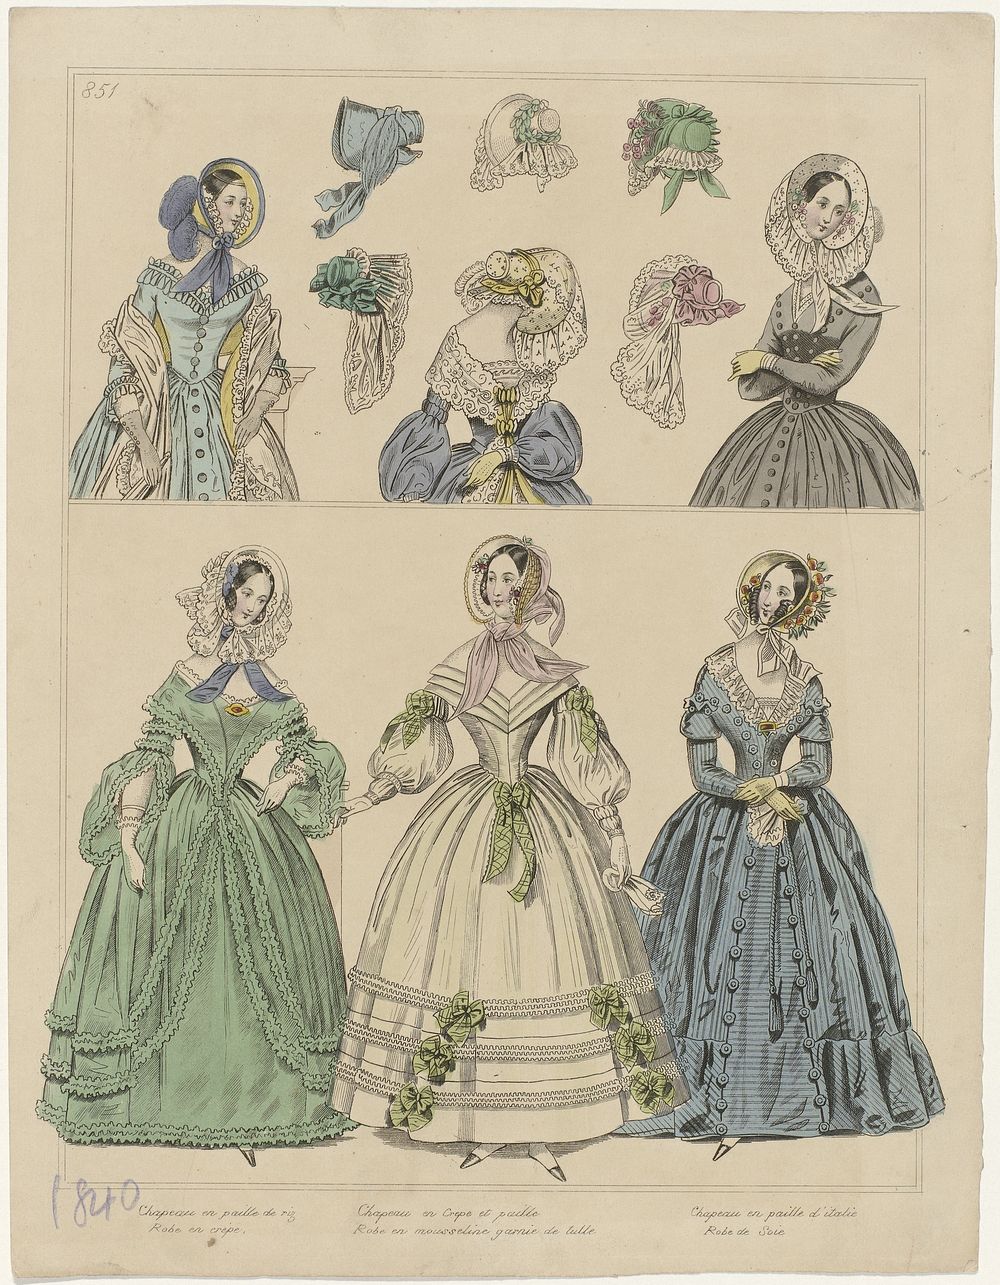 Townsend's Monthly Selection of Parisian Costumes, 1840, No. 851 : Chapeaux en paille de riz (...) (1840) by anonymous and…